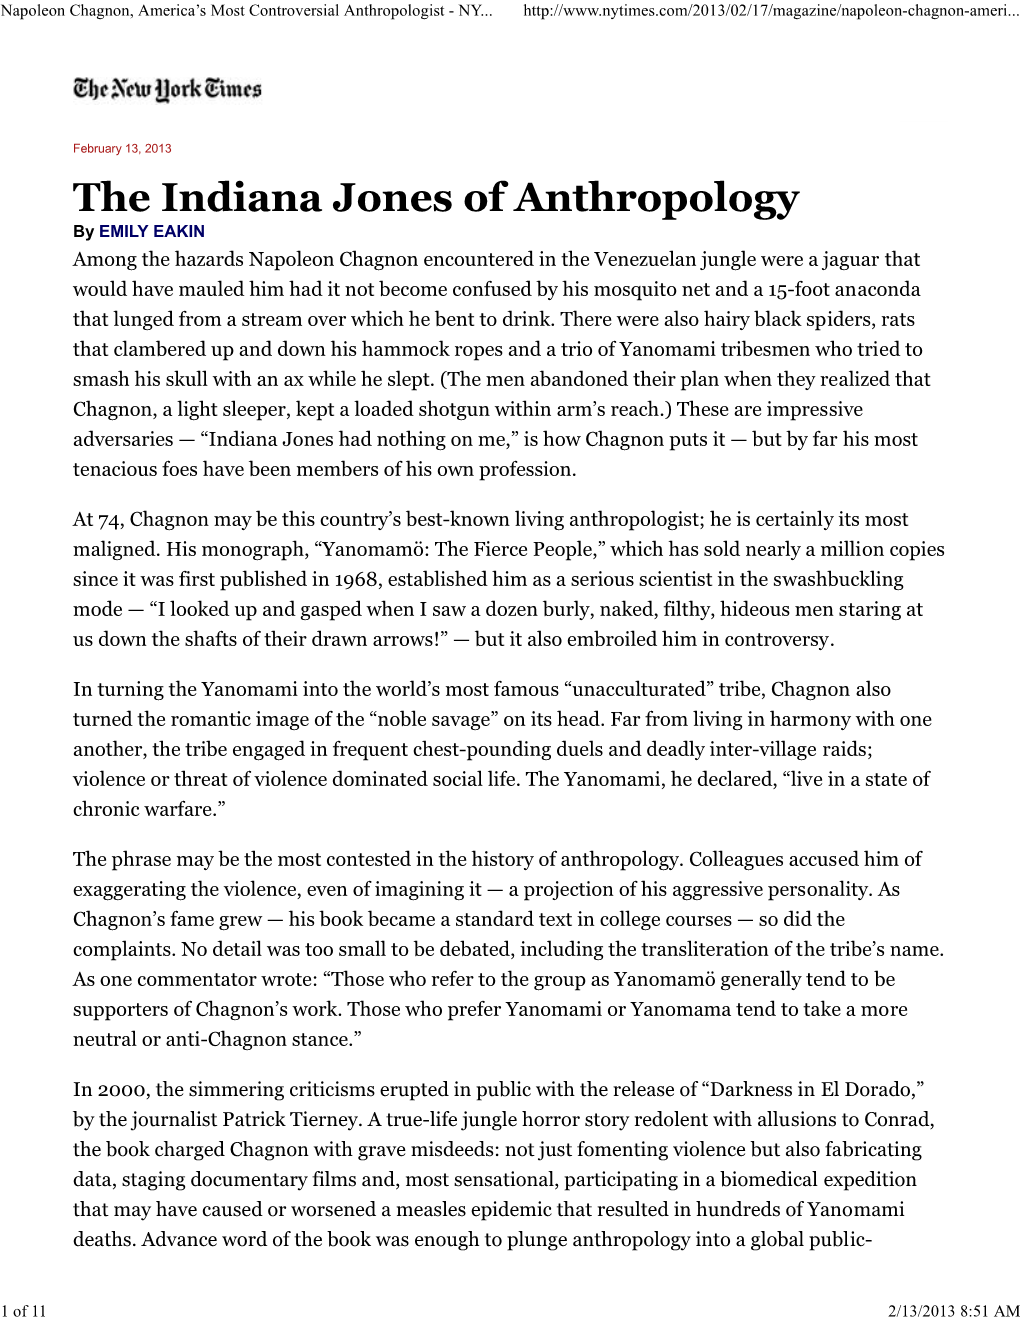 The Indiana Jones of Anthropology